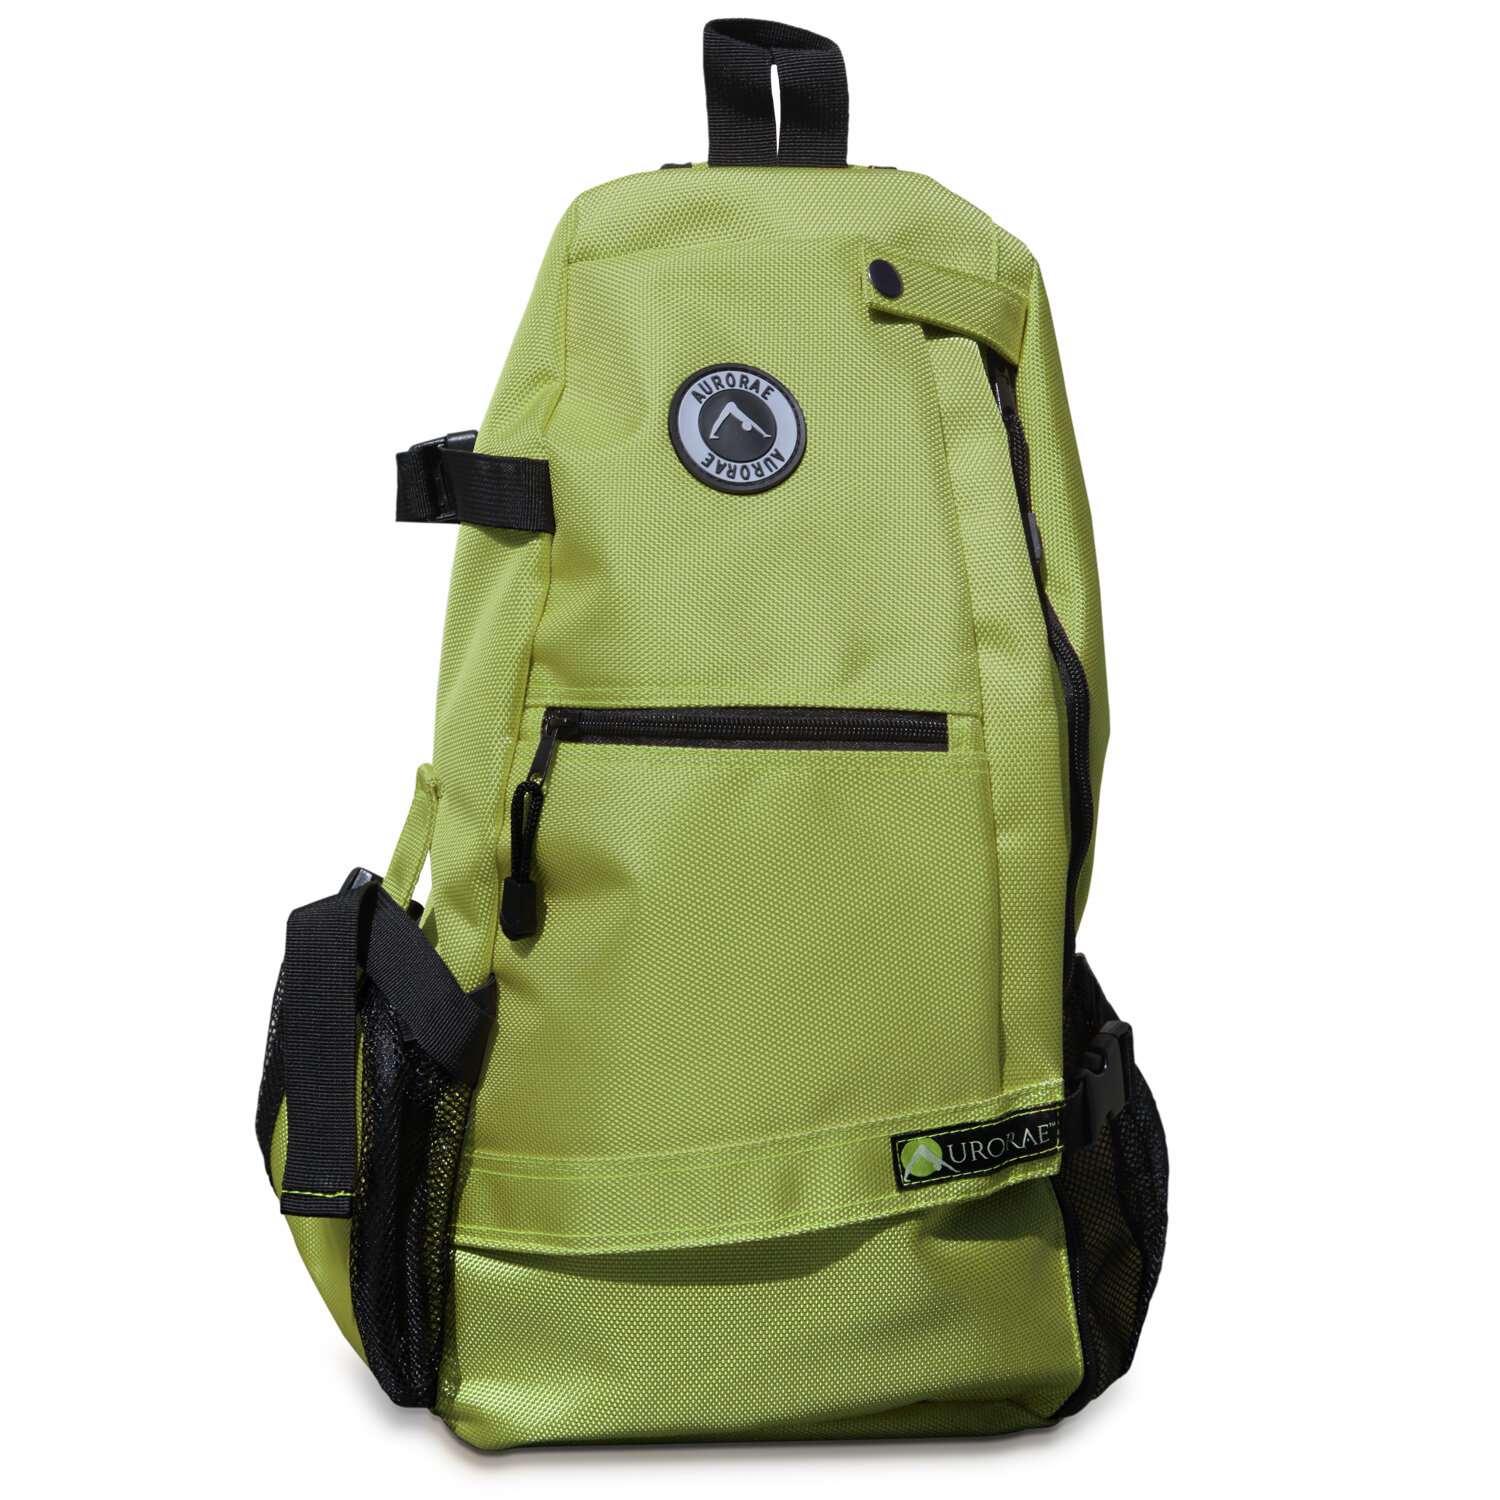 sportbag-1500-green-01.jpg